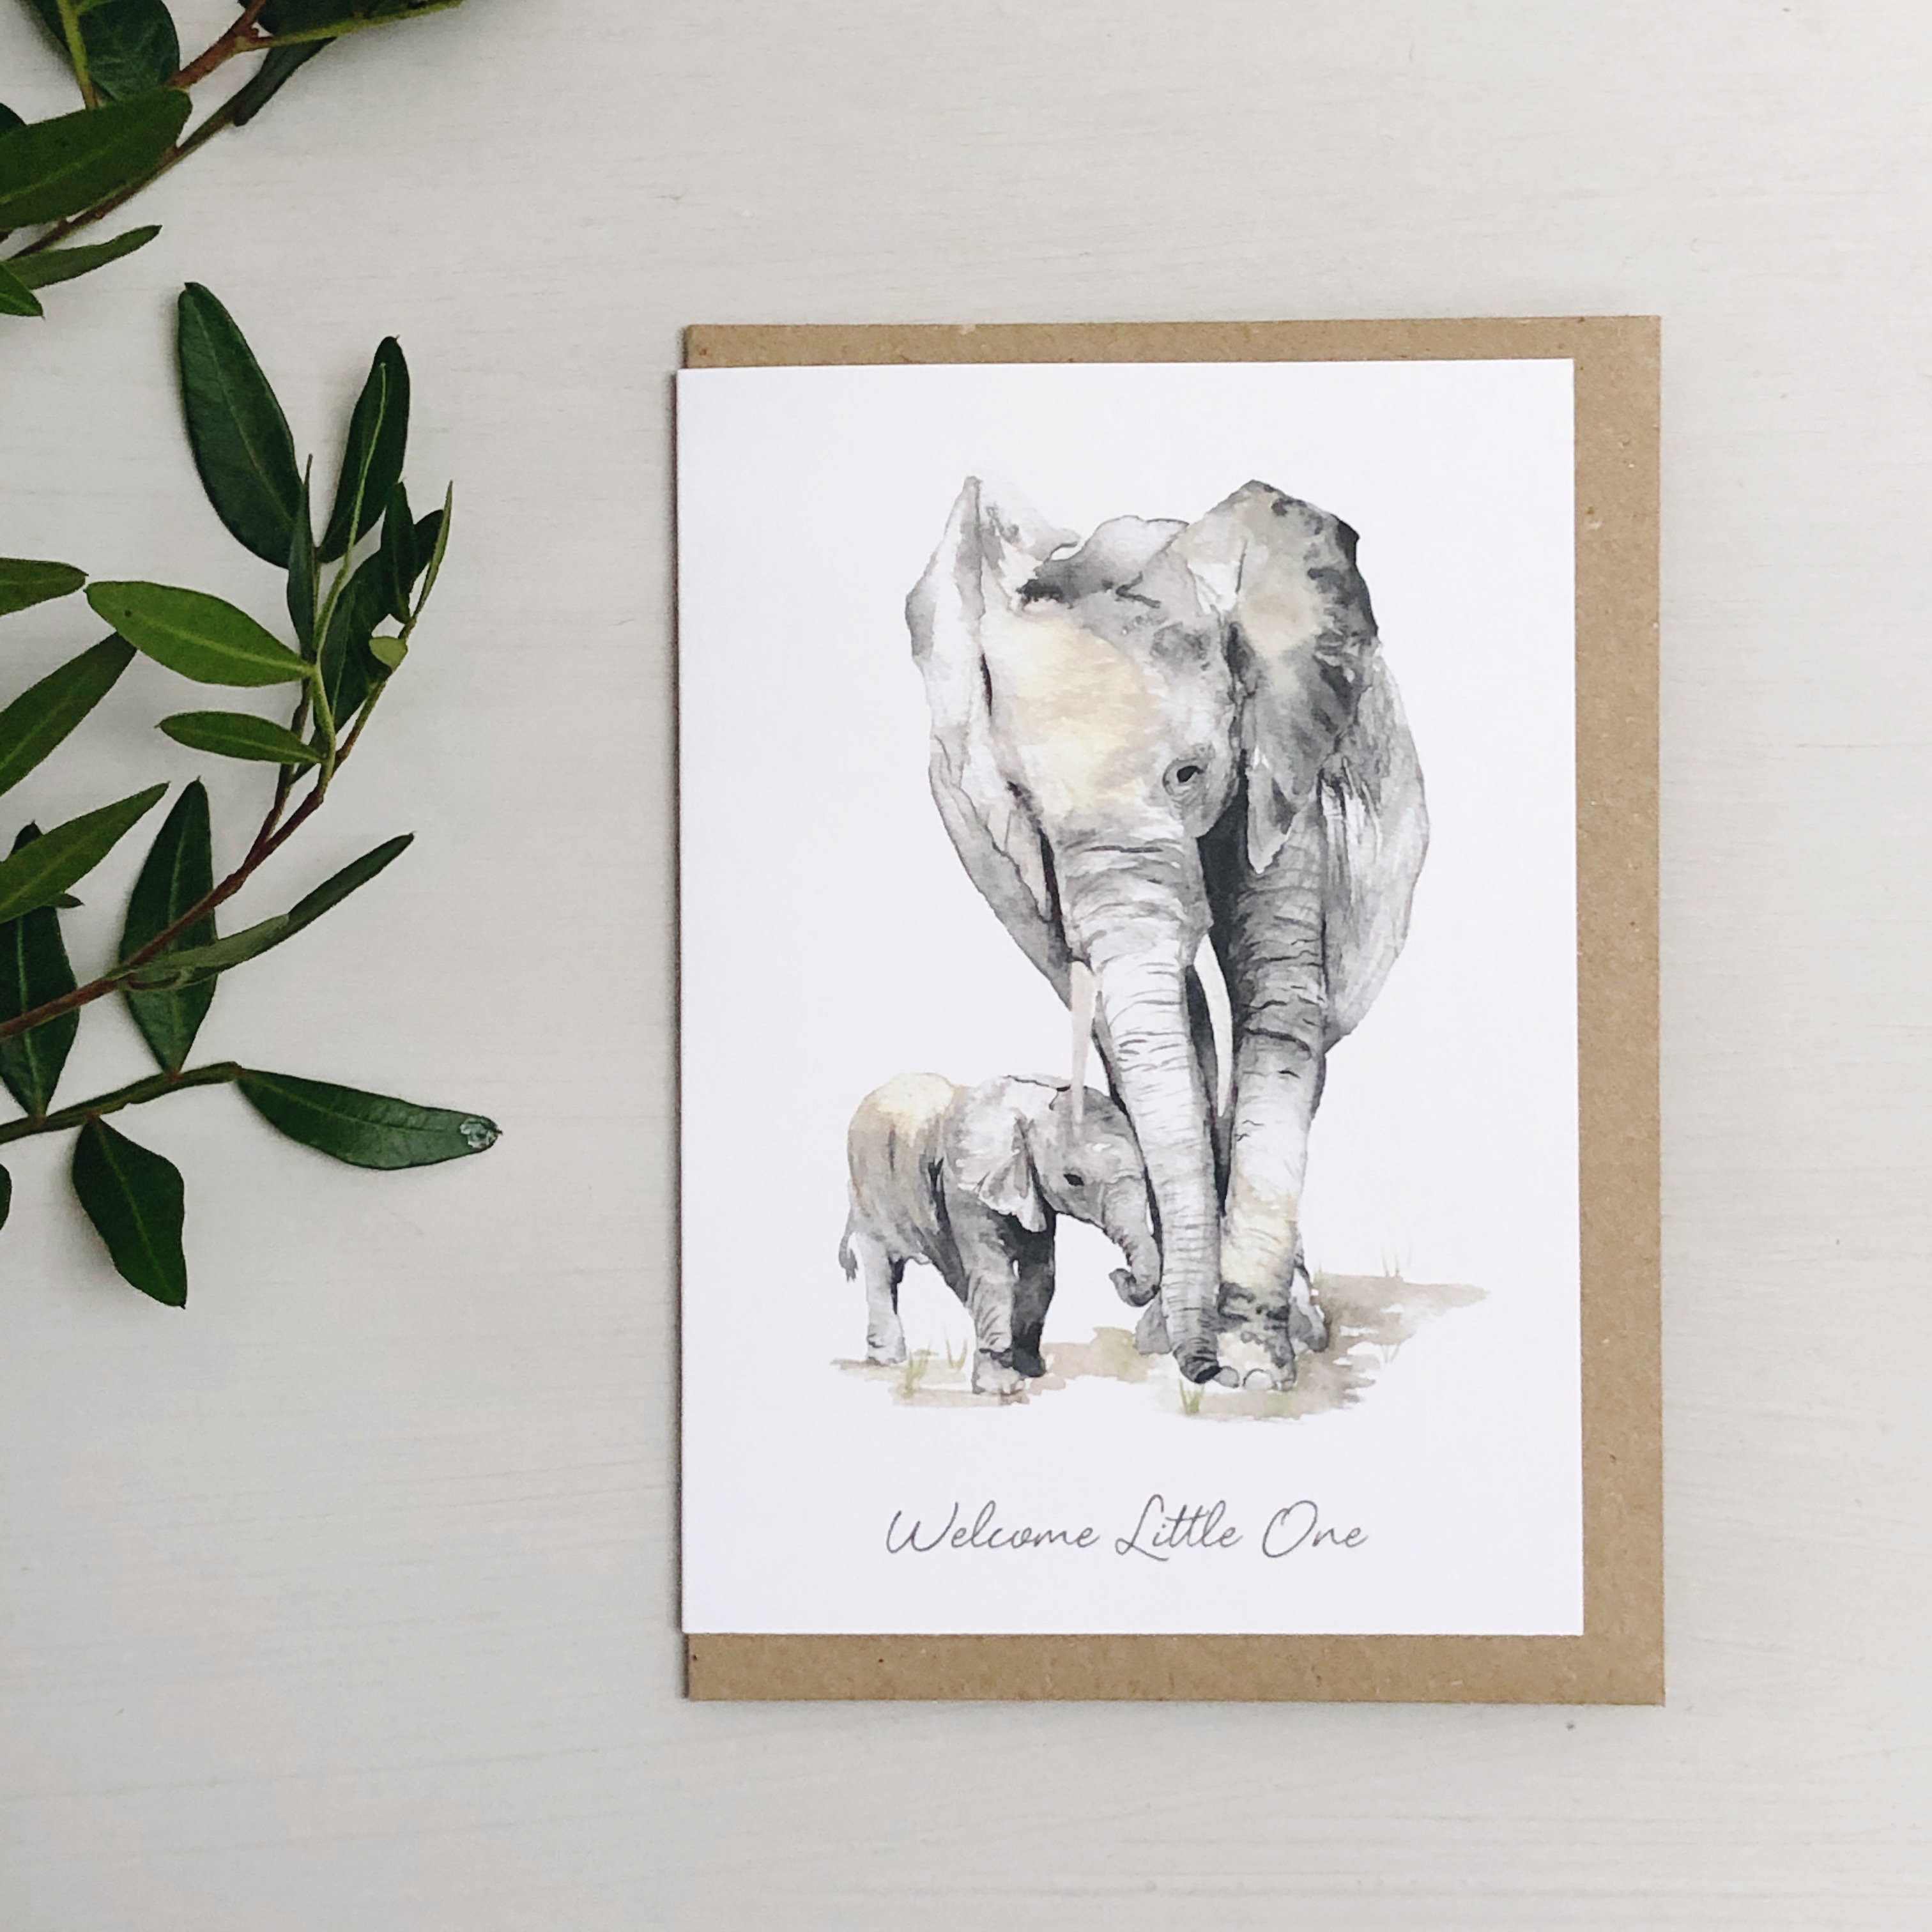 New Baby Elephants Card